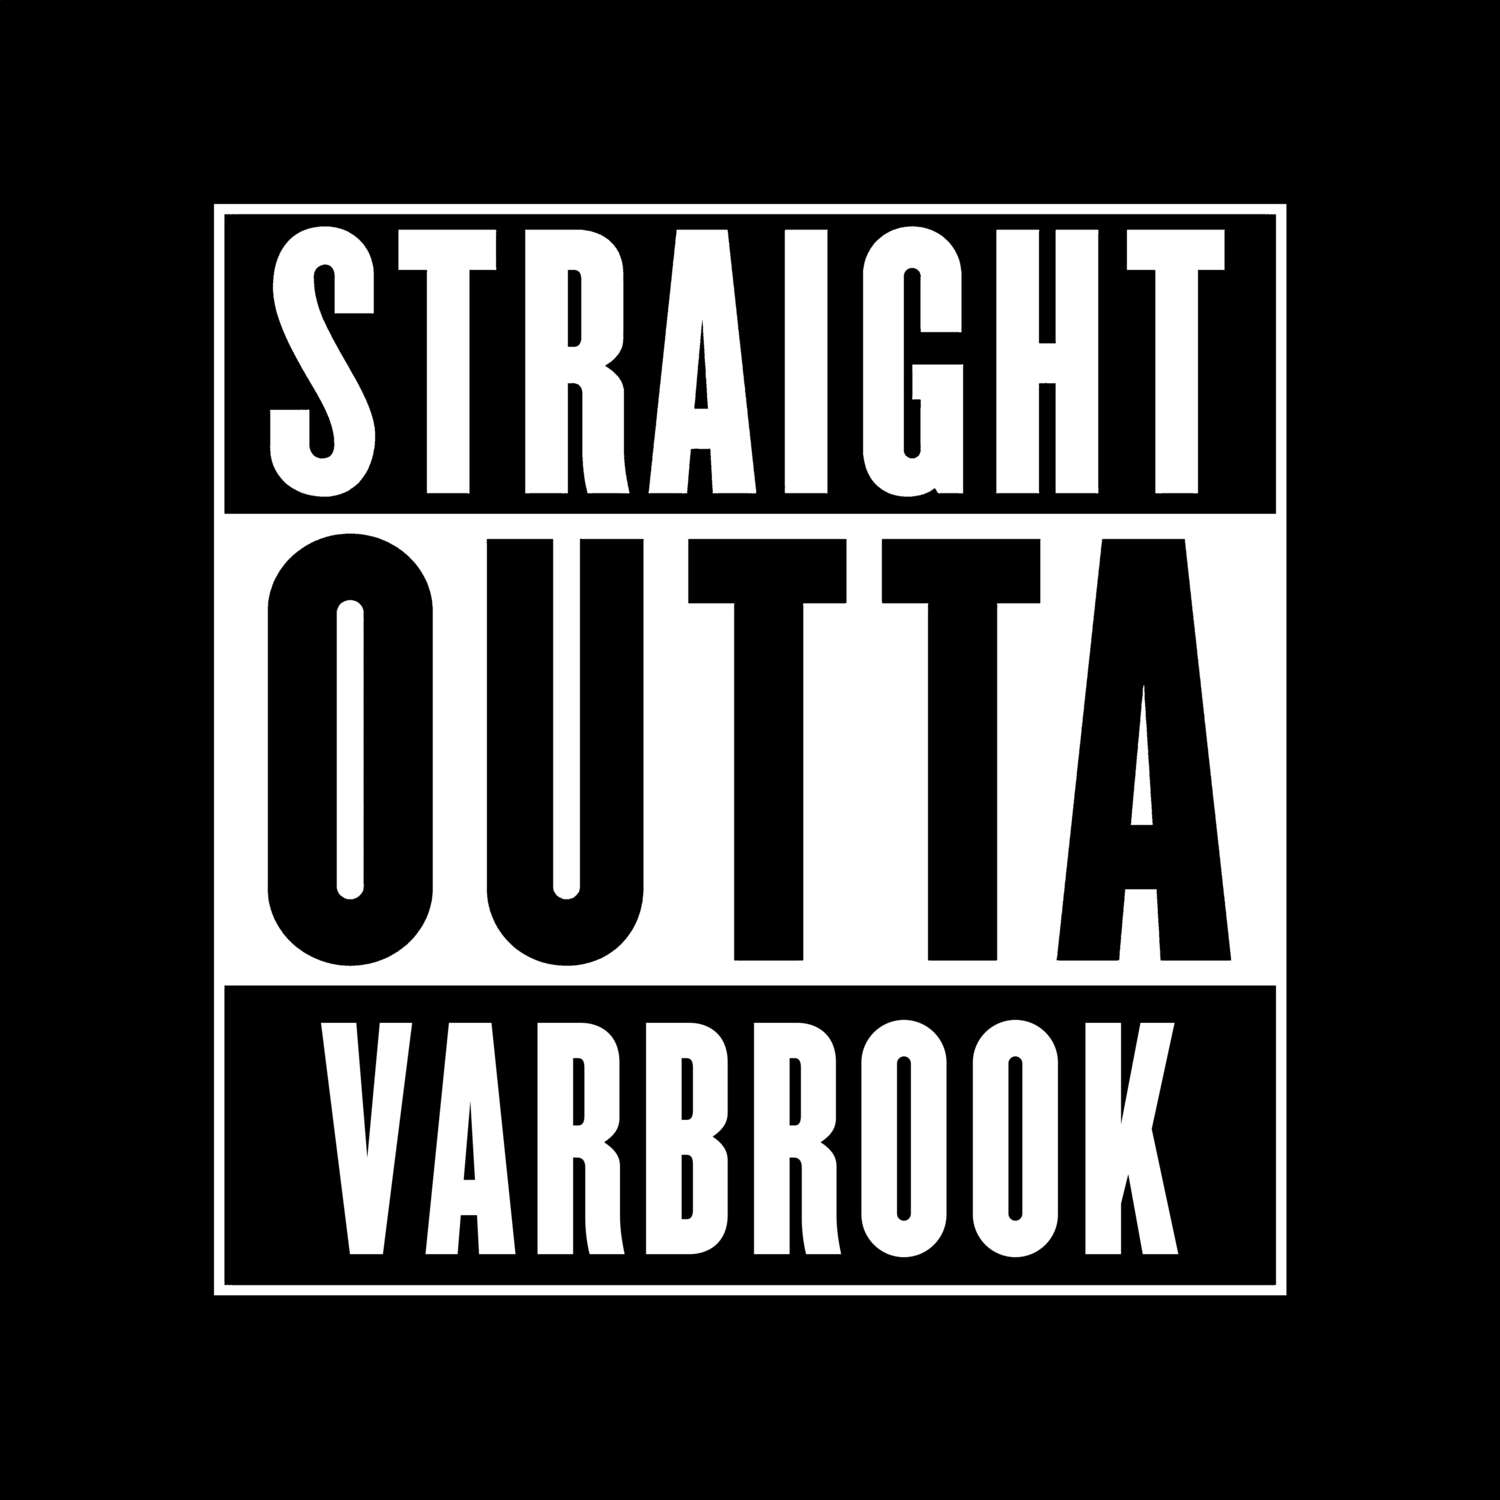 Varbrook T-Shirt »Straight Outta«